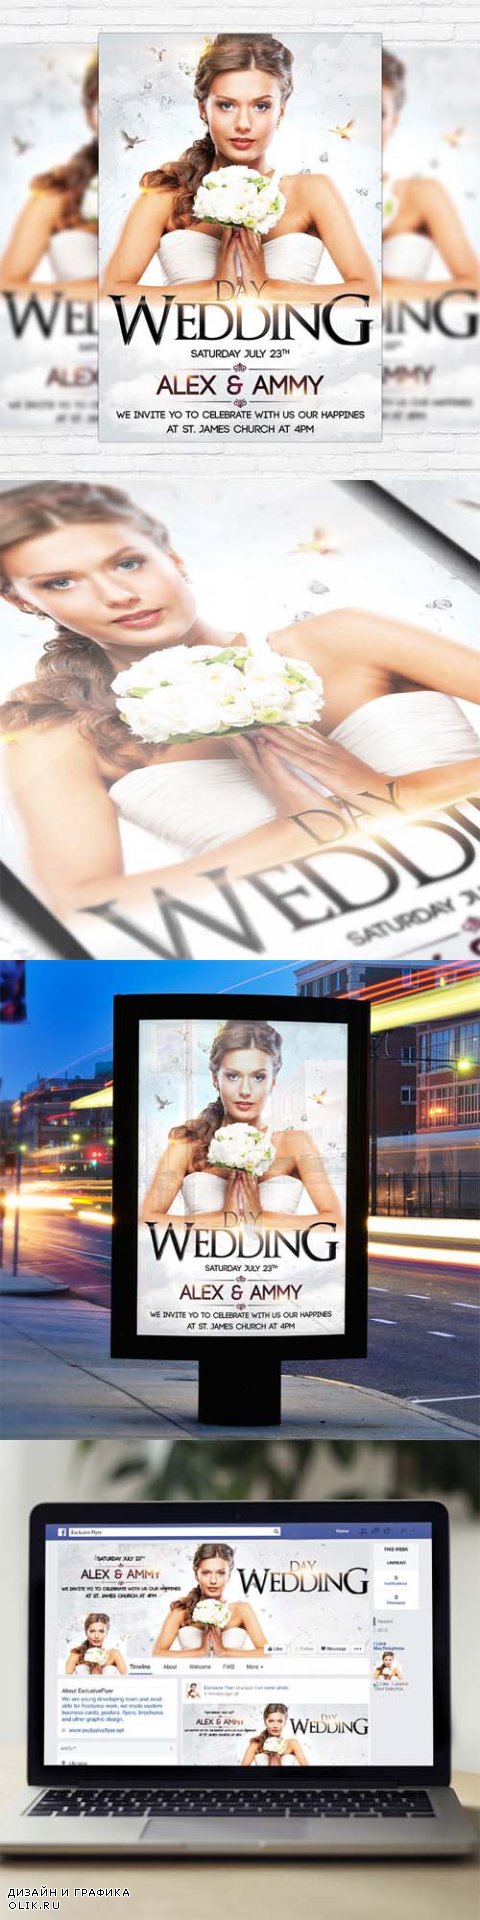 Flyer Template - Wedding Day + Facebook Cover